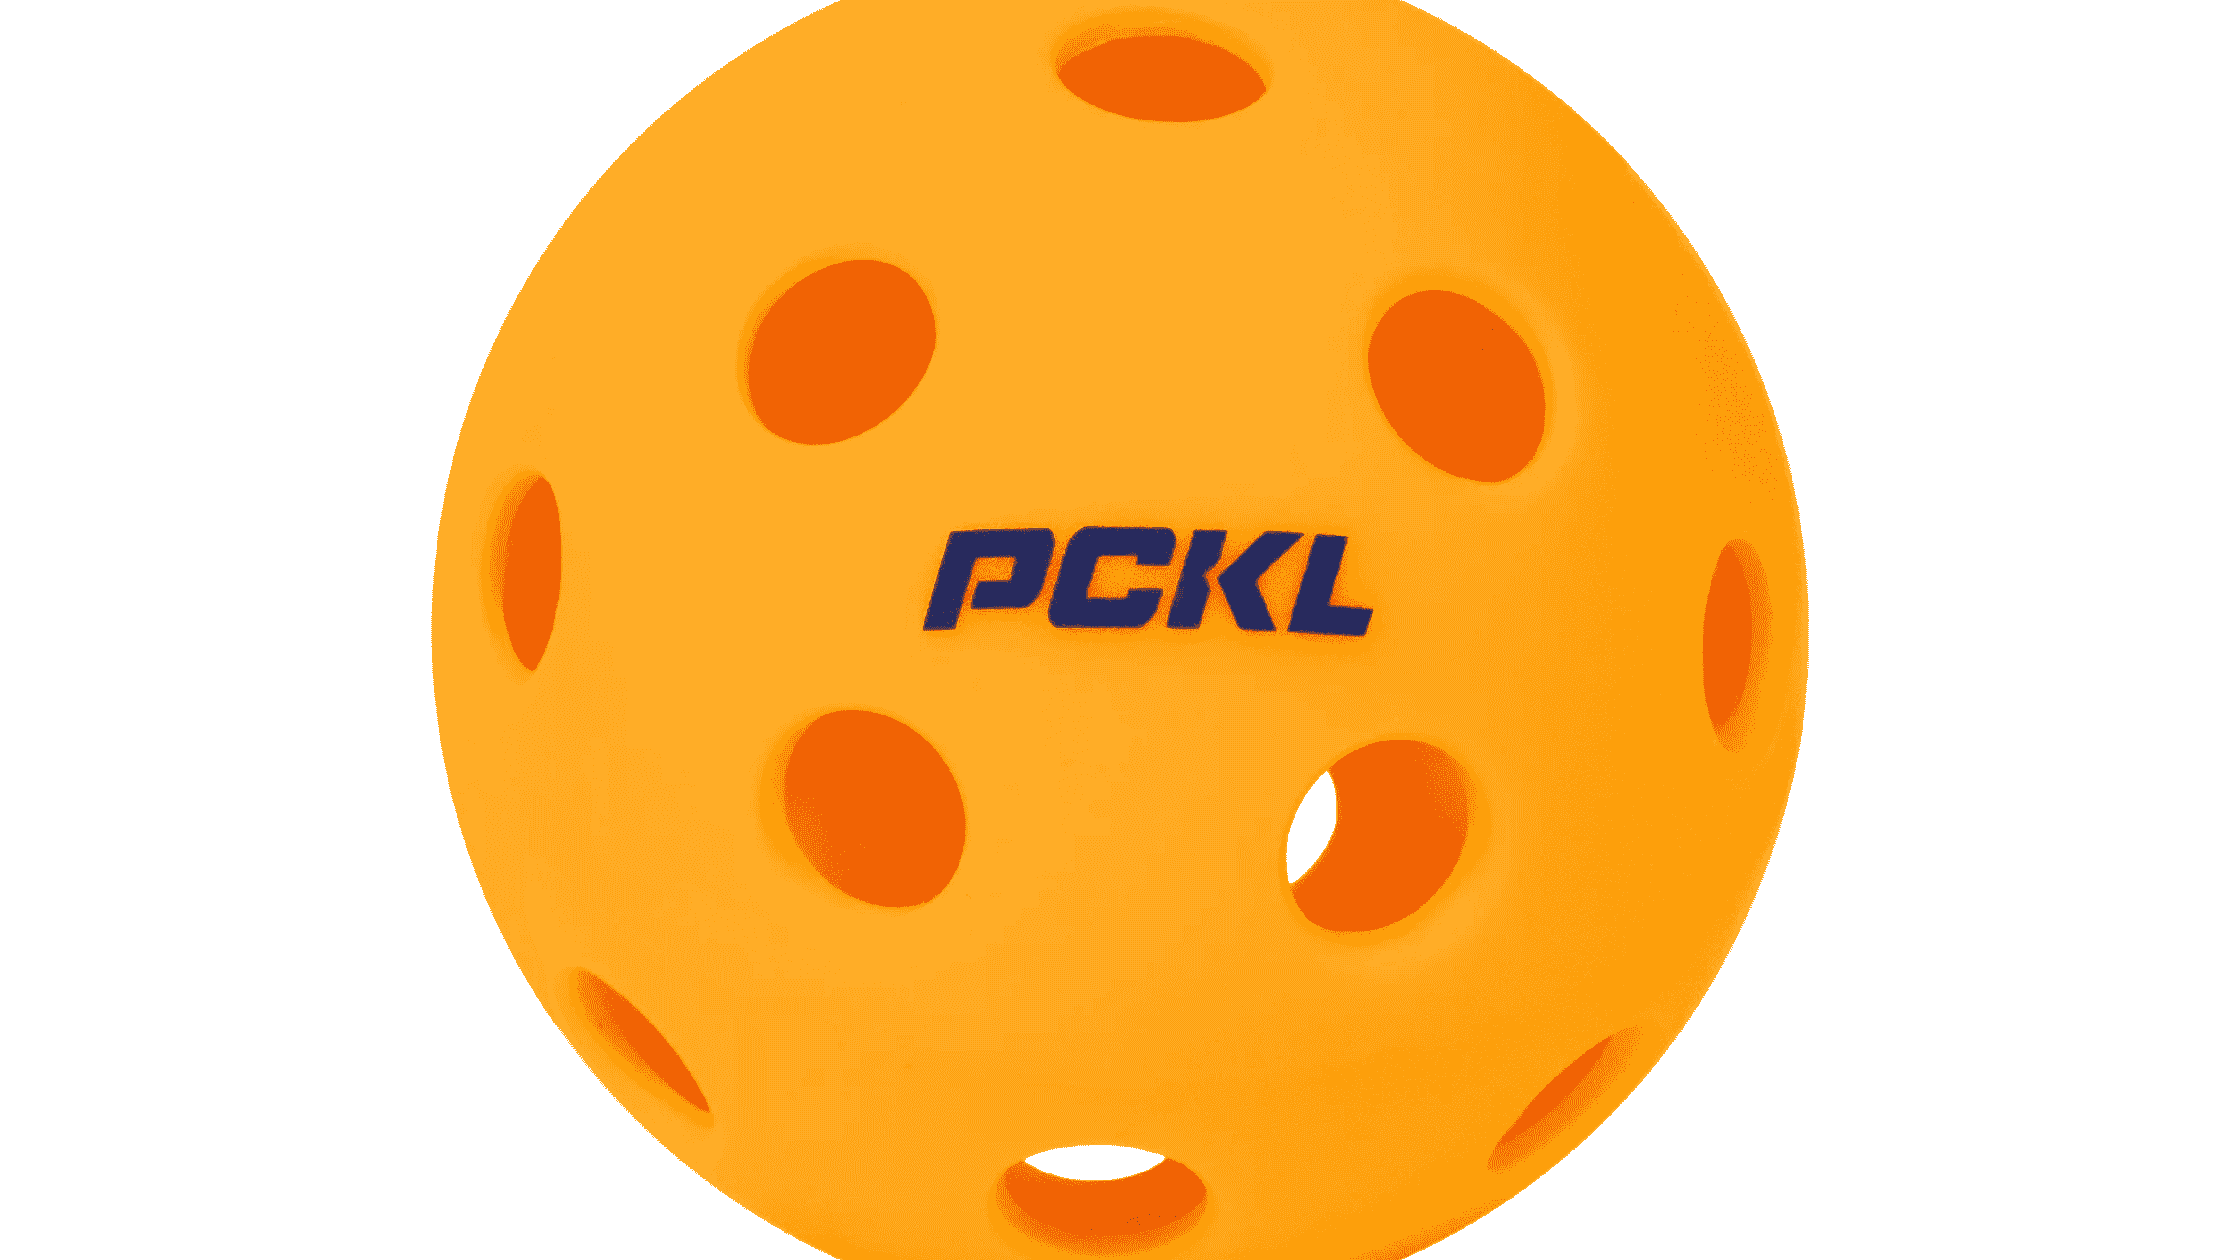 PCKL Optic Speed Pickleball Balls